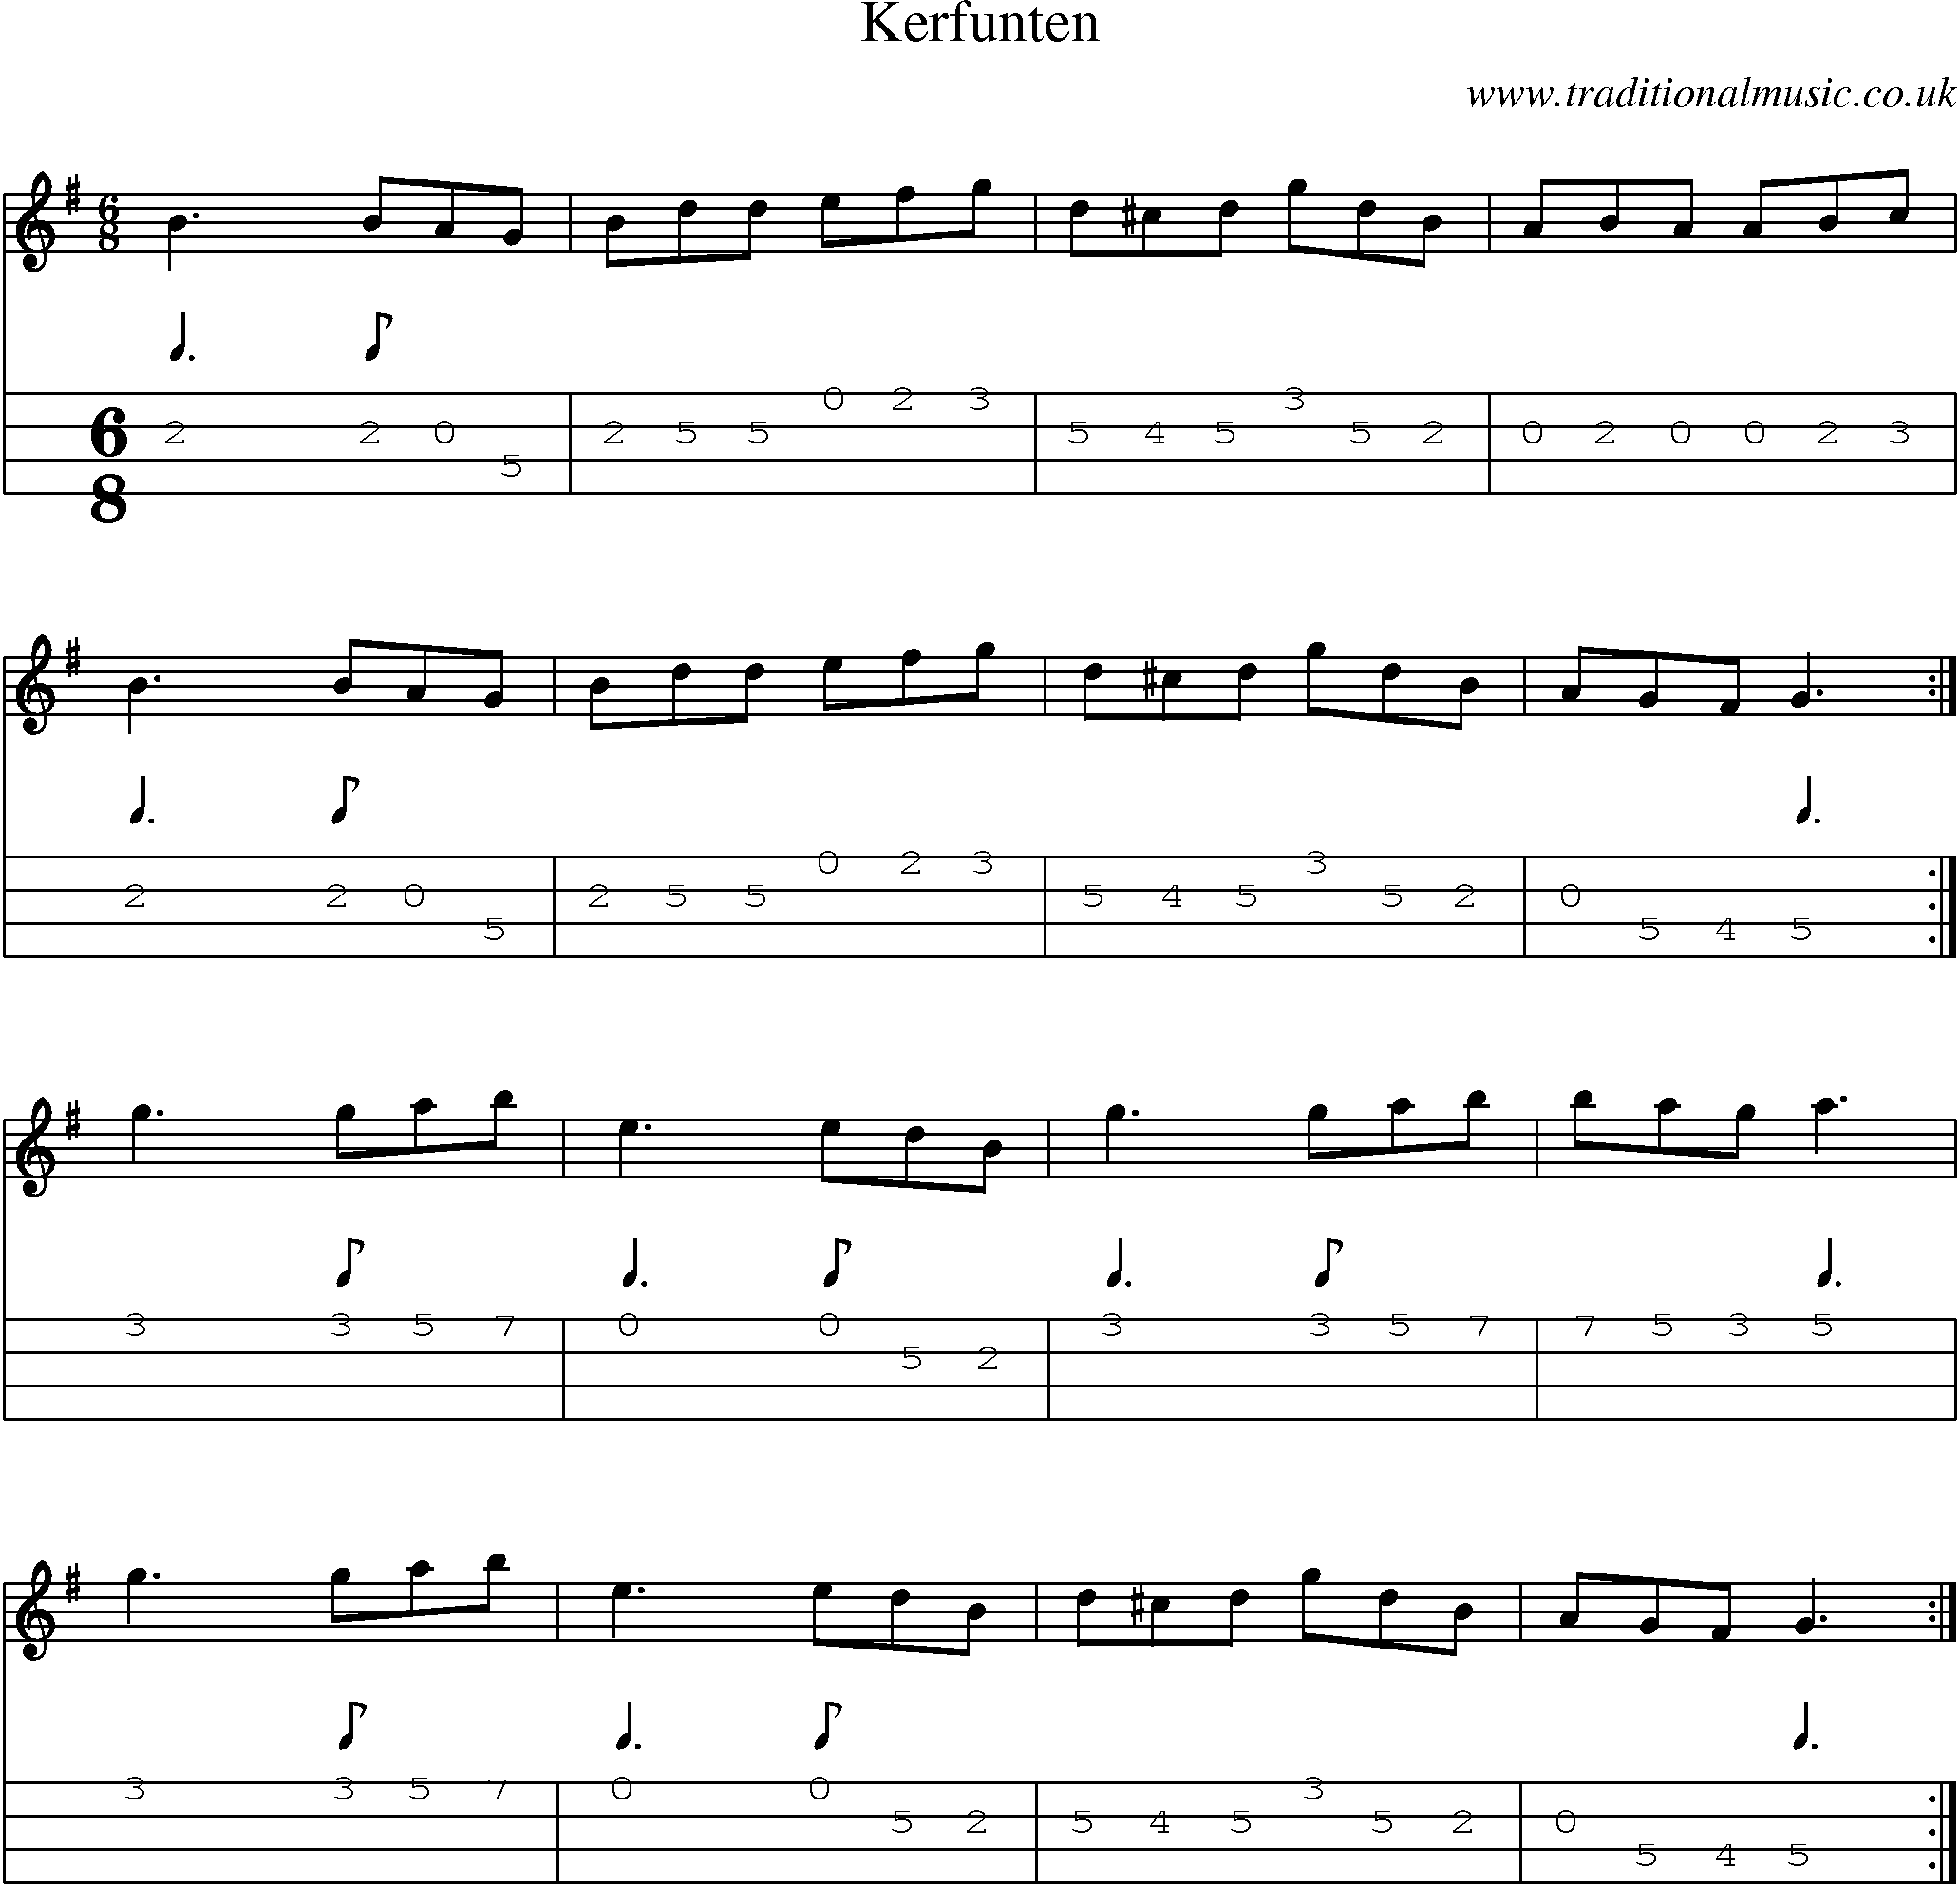 Music Score and Mandolin Tabs for Kerfunten